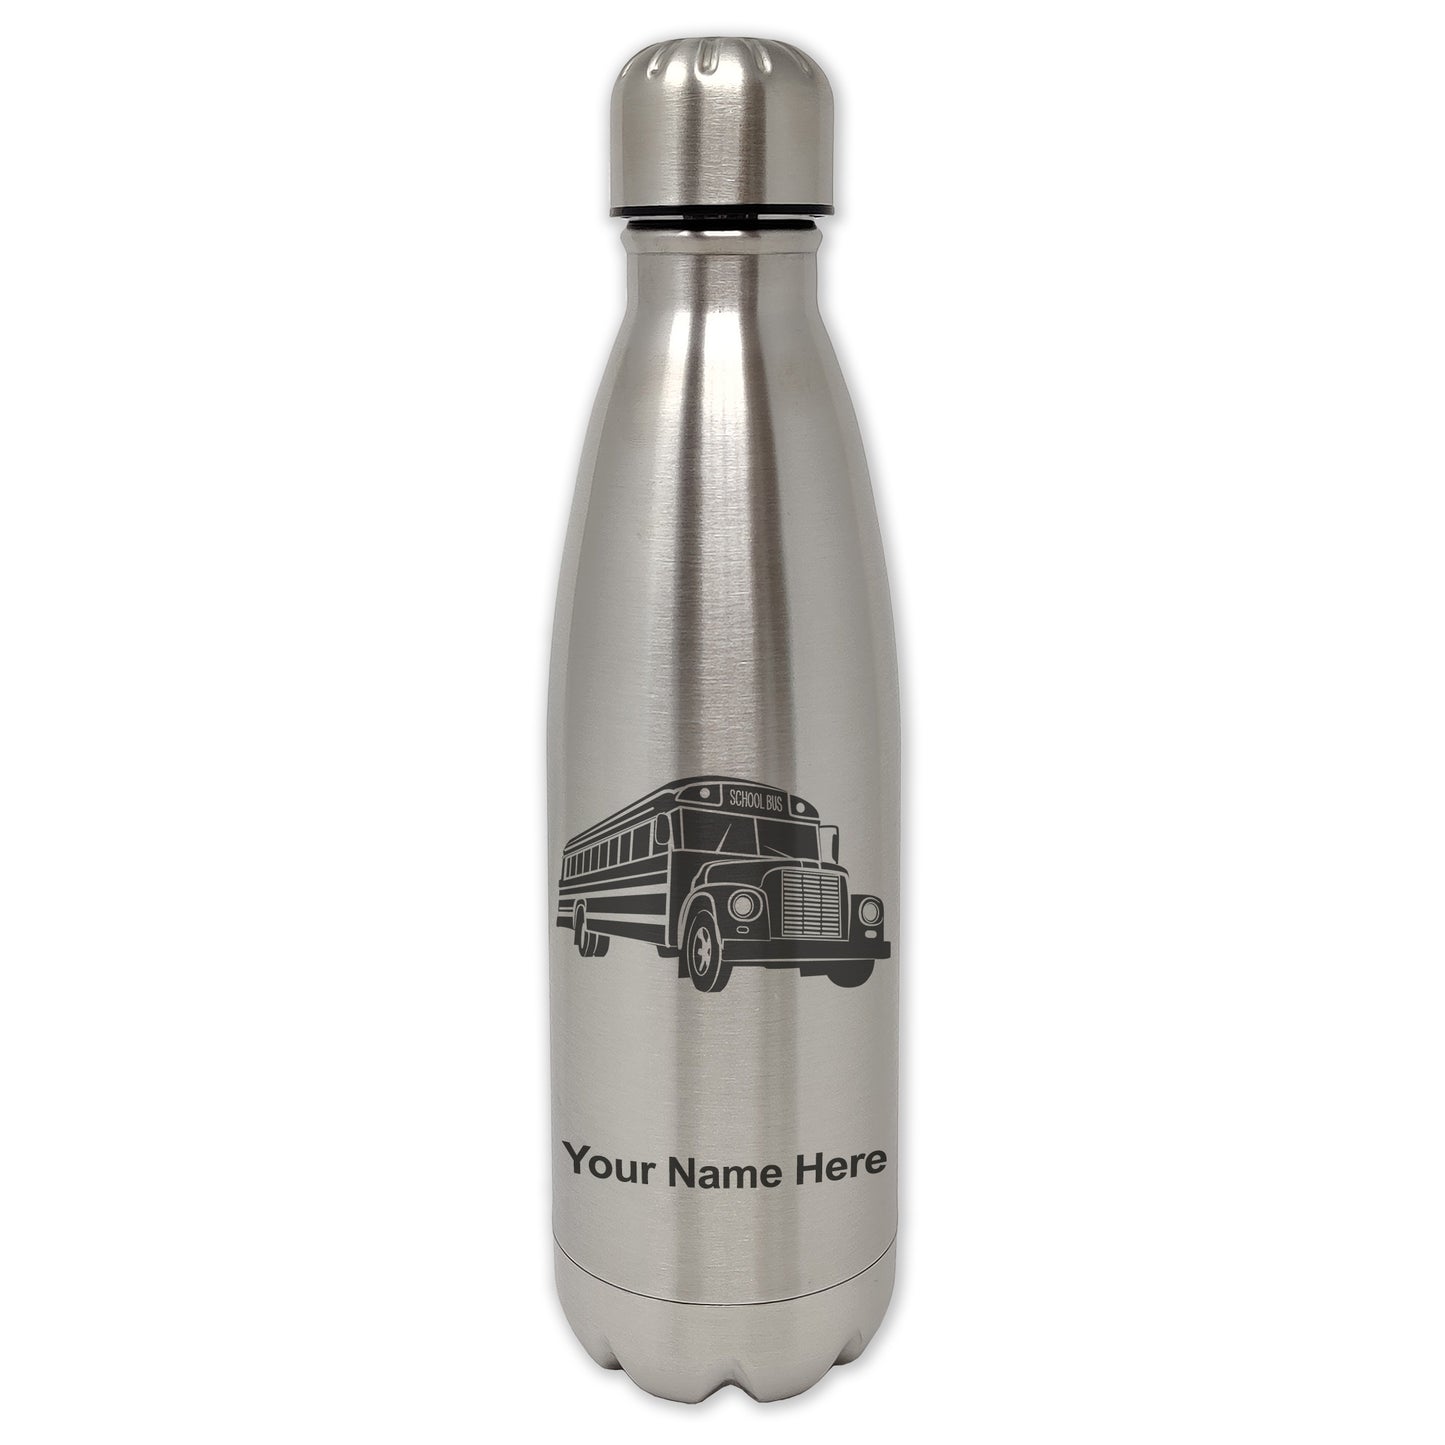 LaserGram Single Wall Water Bottle, School Bus, Personalized Engraving Included